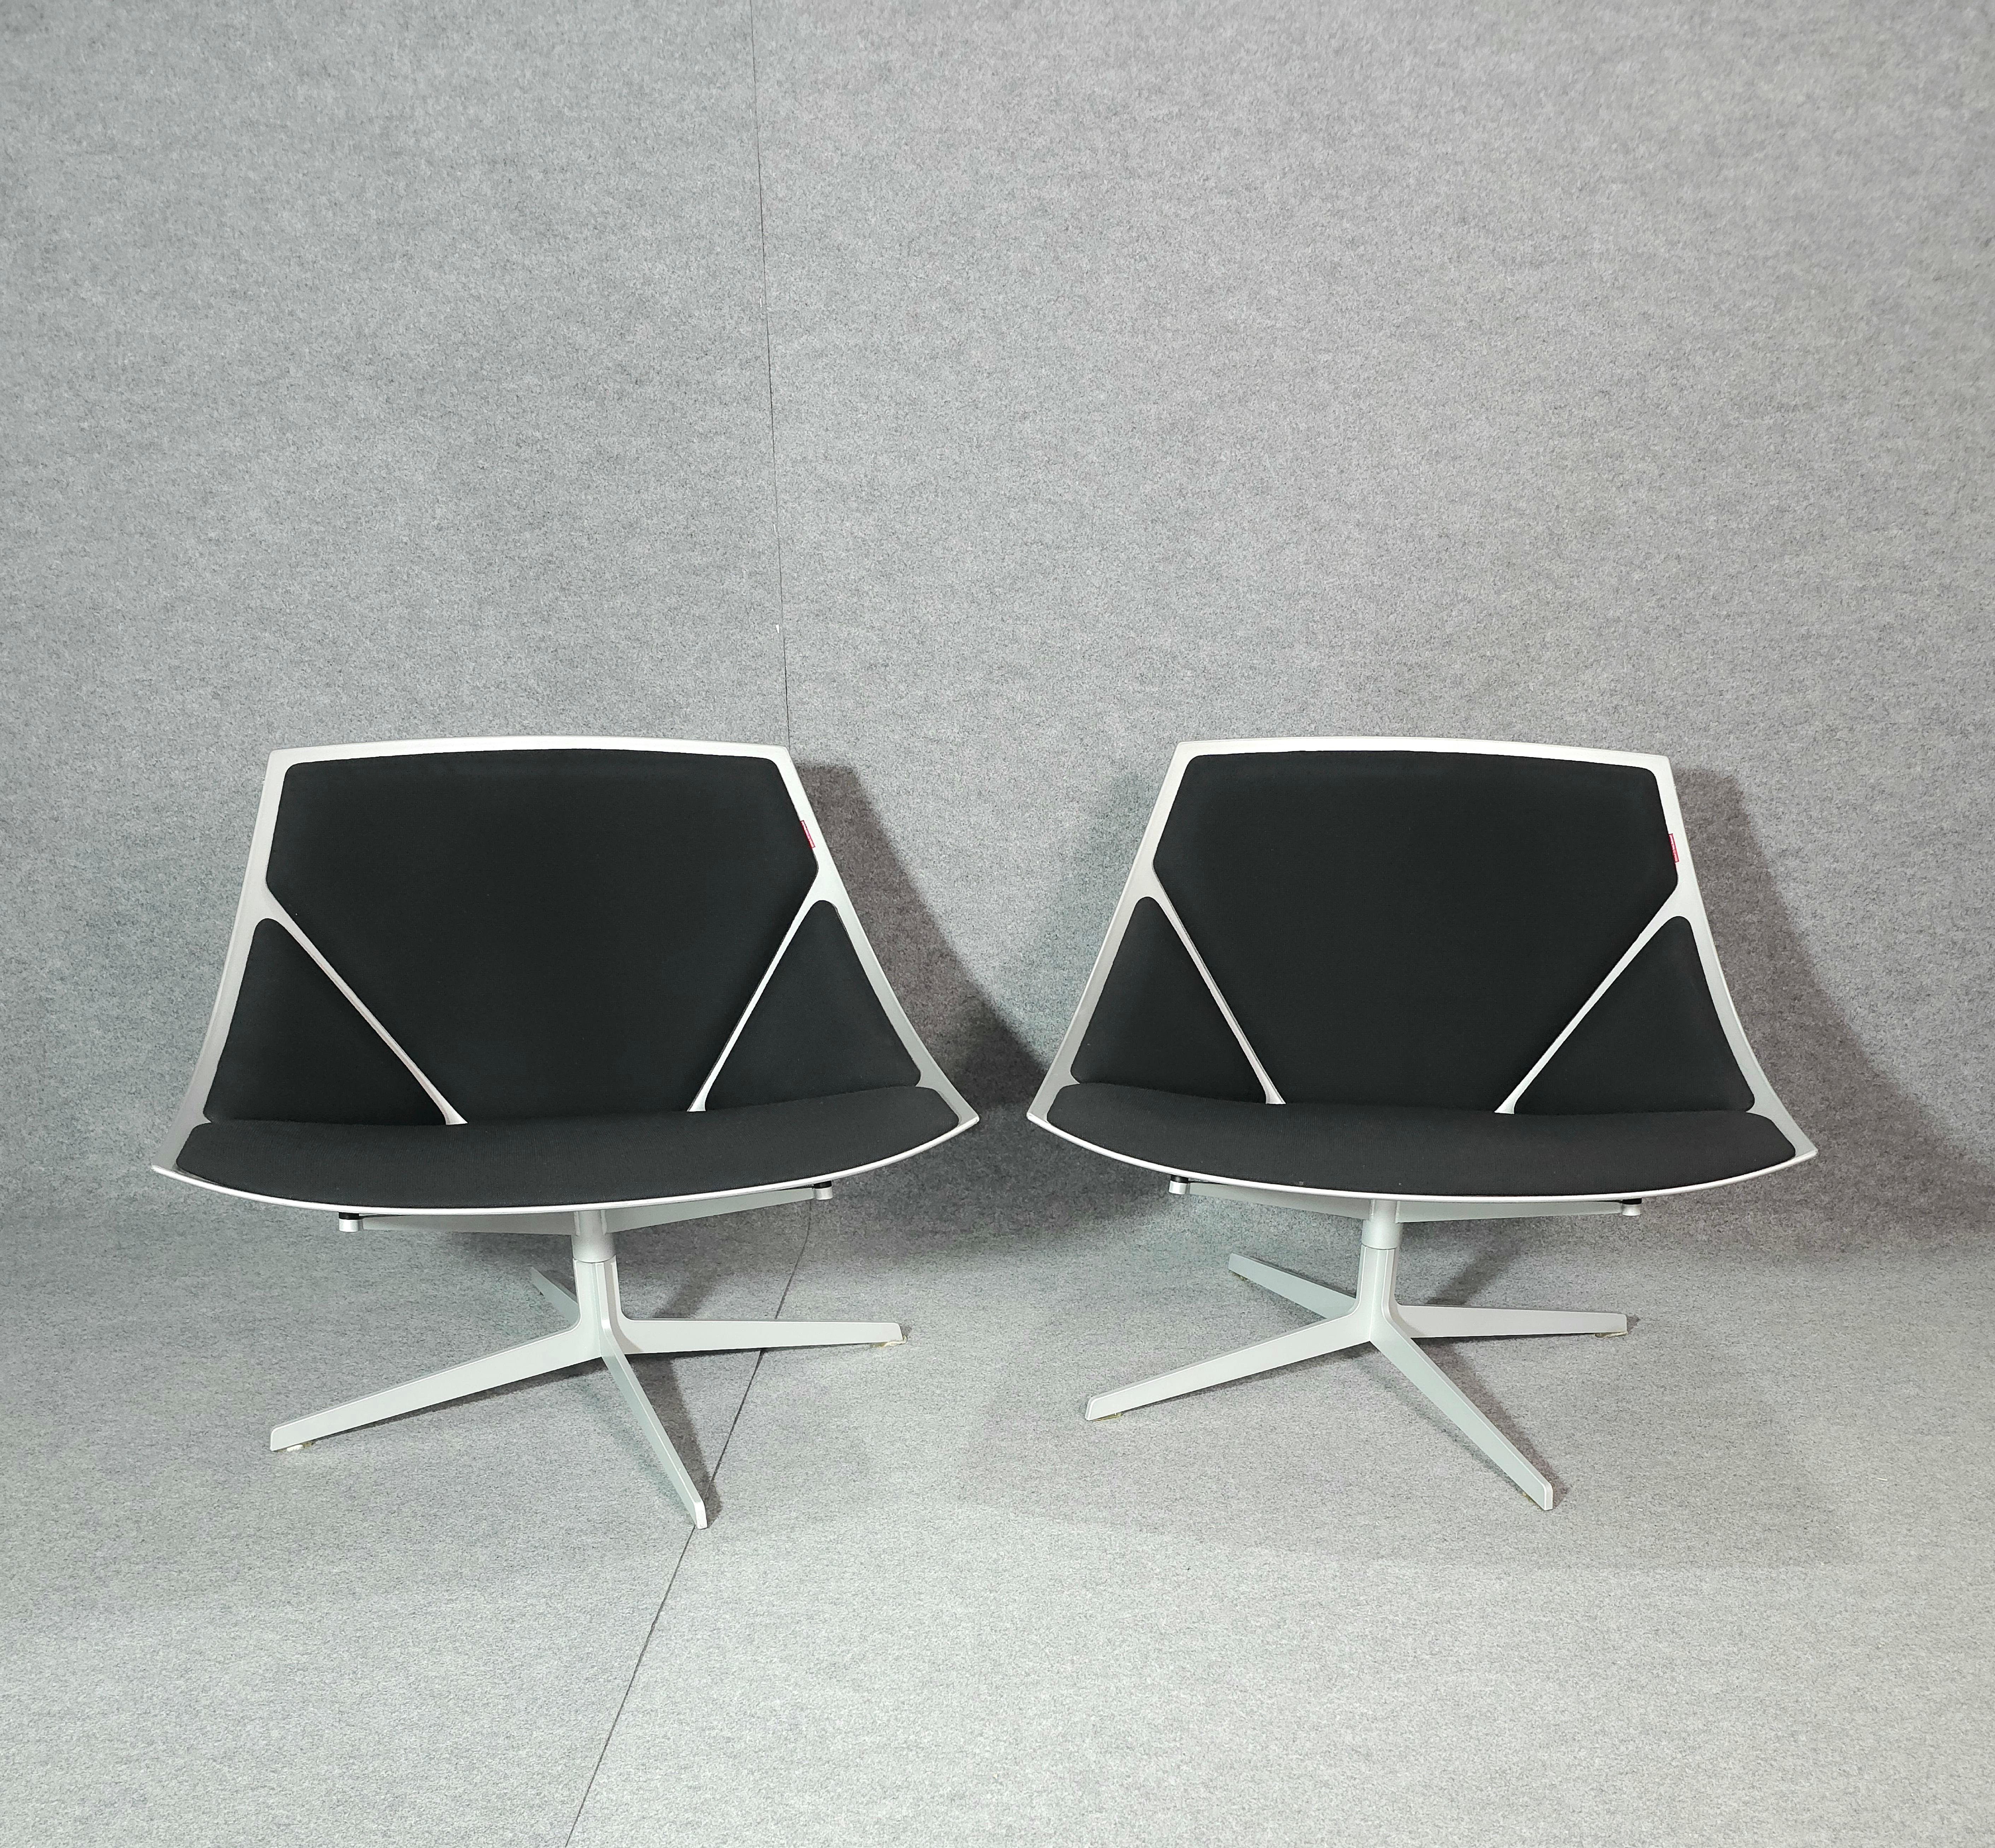 Jehs & Laub for Fritz Hansen Swivel Chair Modern Pair Denmark Design 2007 In Good Condition For Sale In Palermo, IT